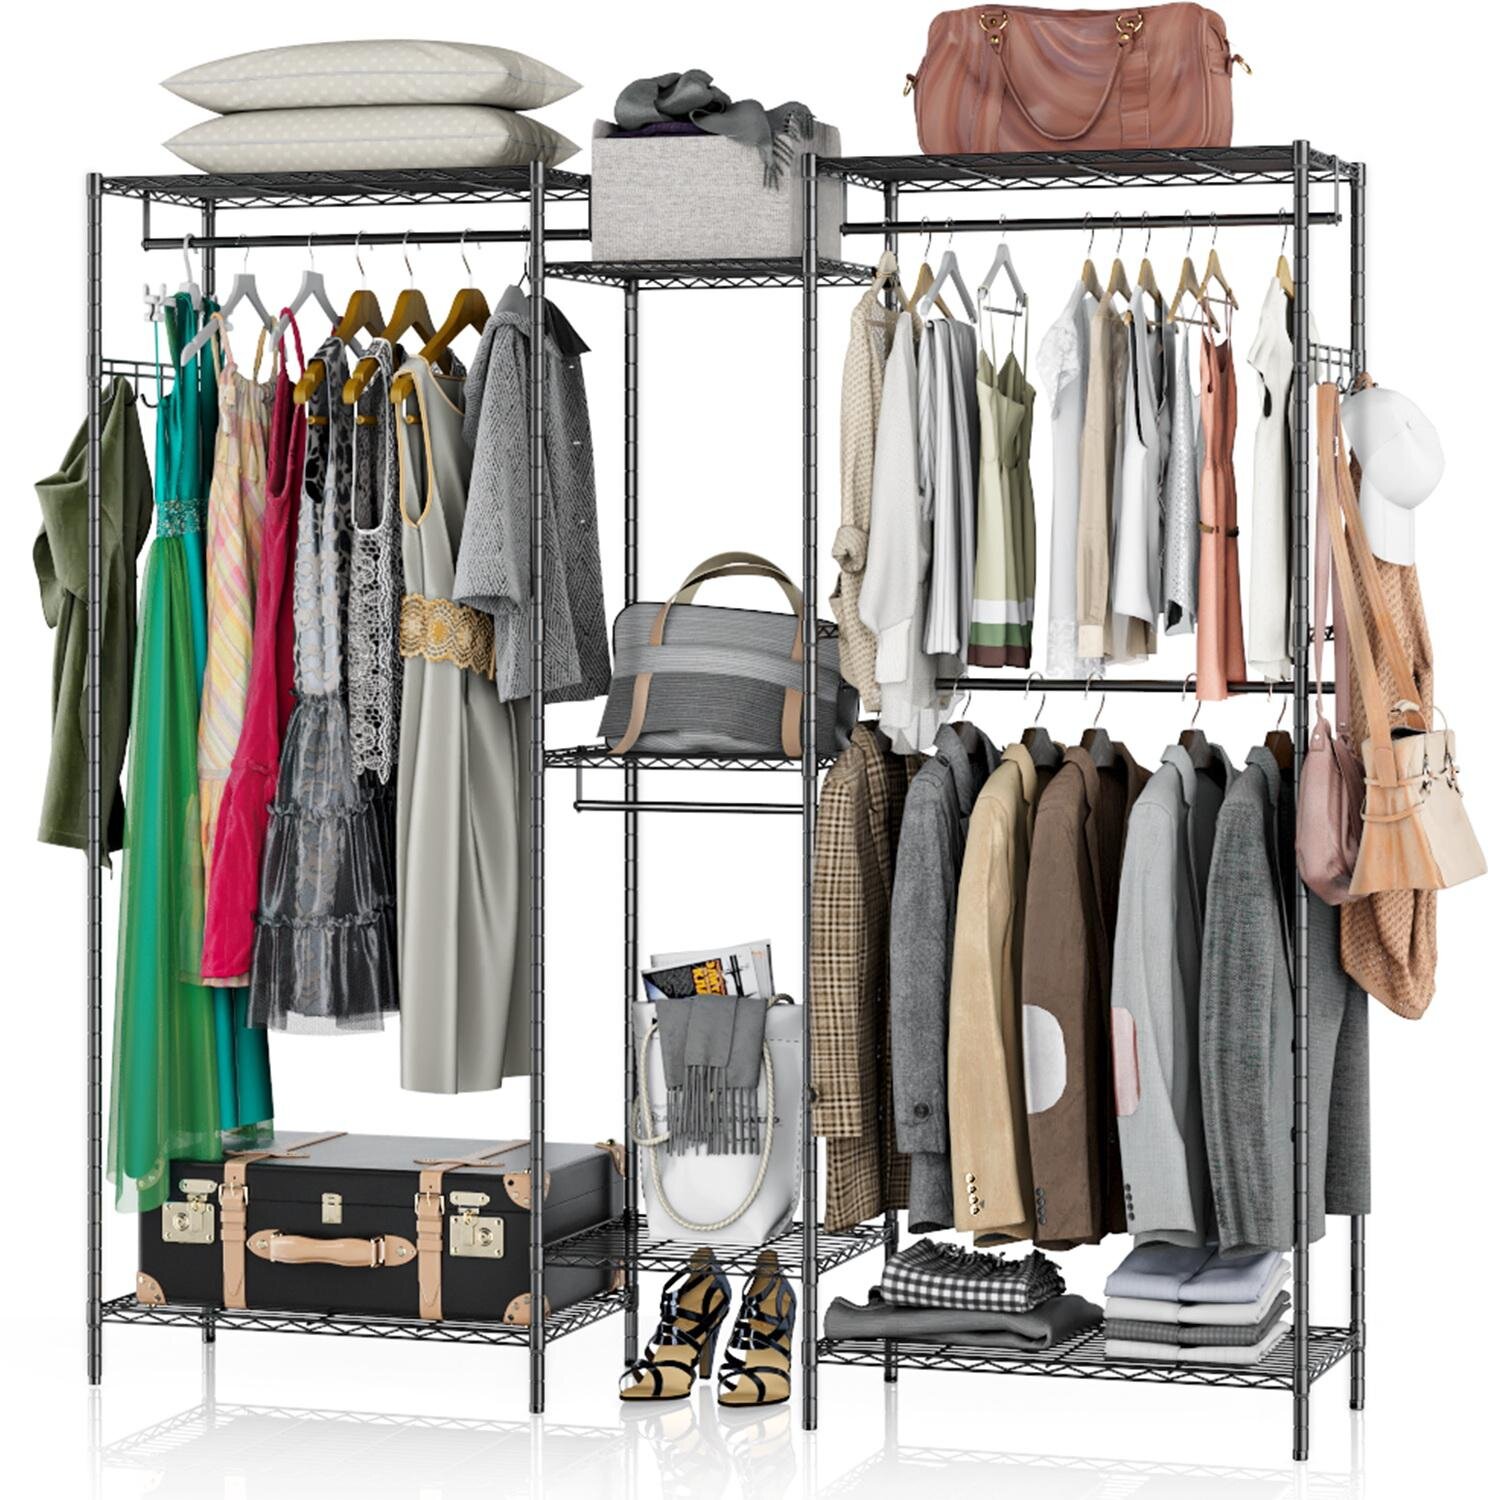 1 Rod Clothes Garment Rack on Wheels Metal Portable Modern Storage Multiple Shelf Rolling Extendable Organizer 